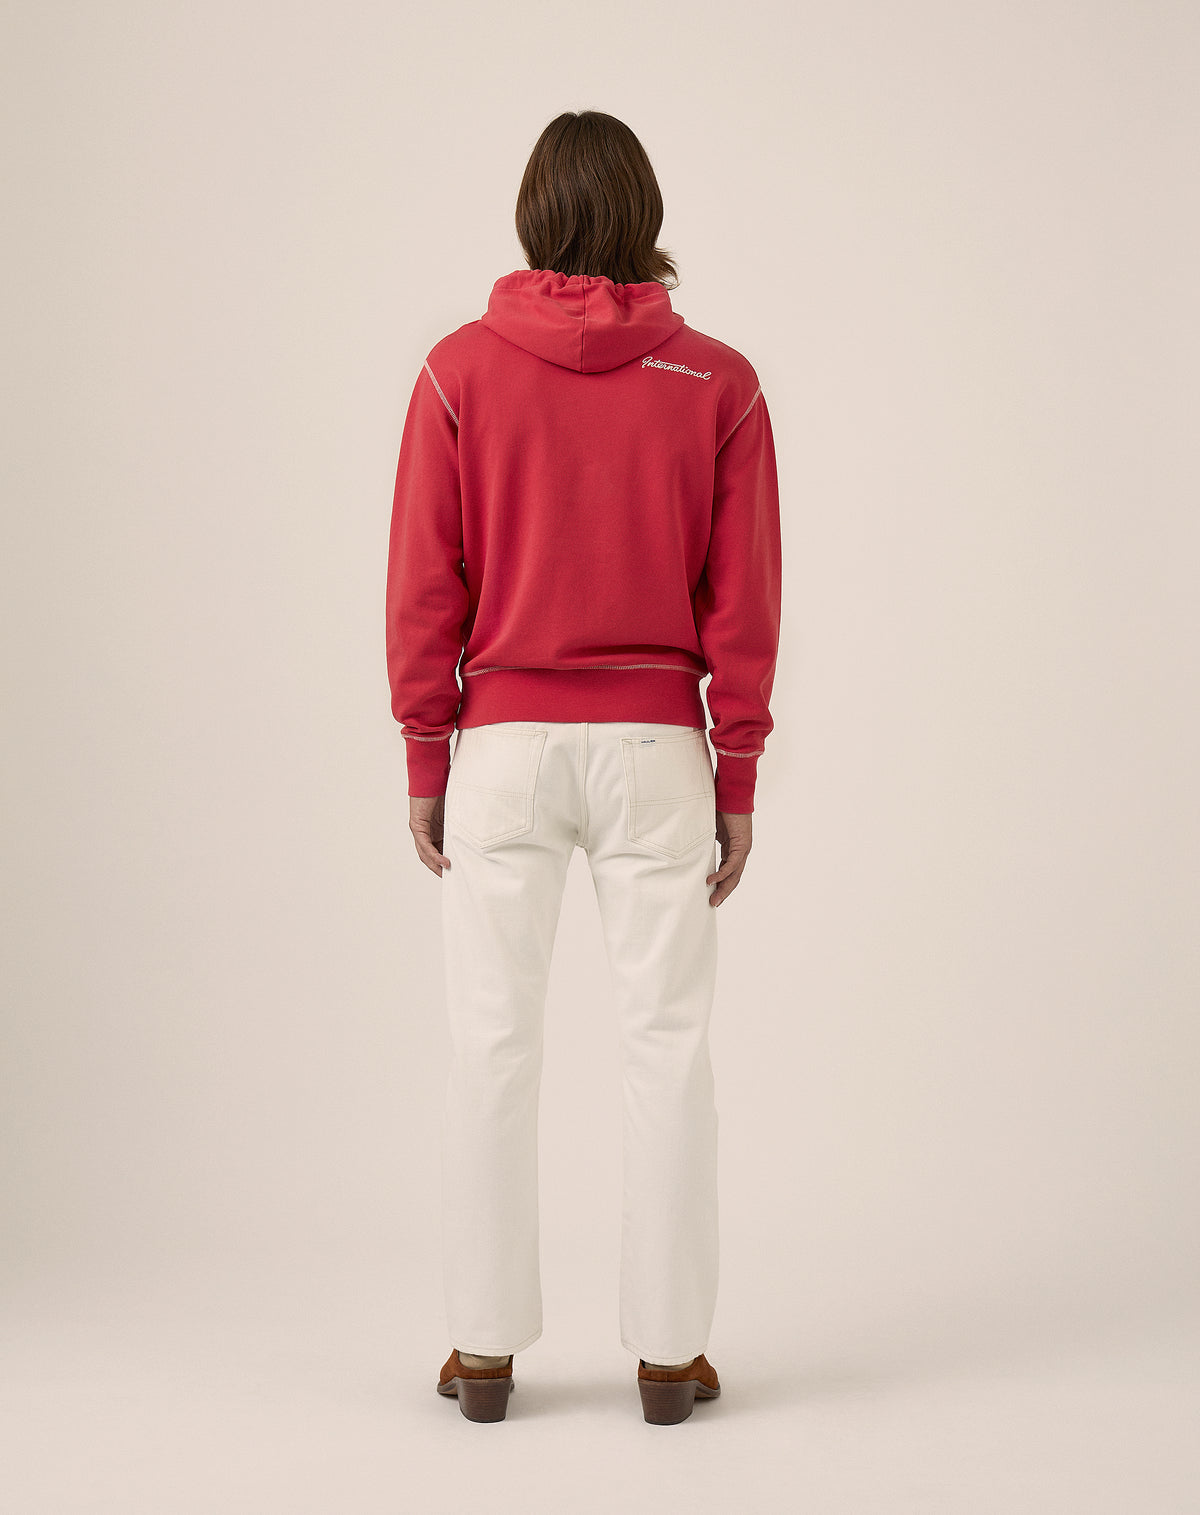 Brockton Hooded Sweatshirt - Washed Red Fleece